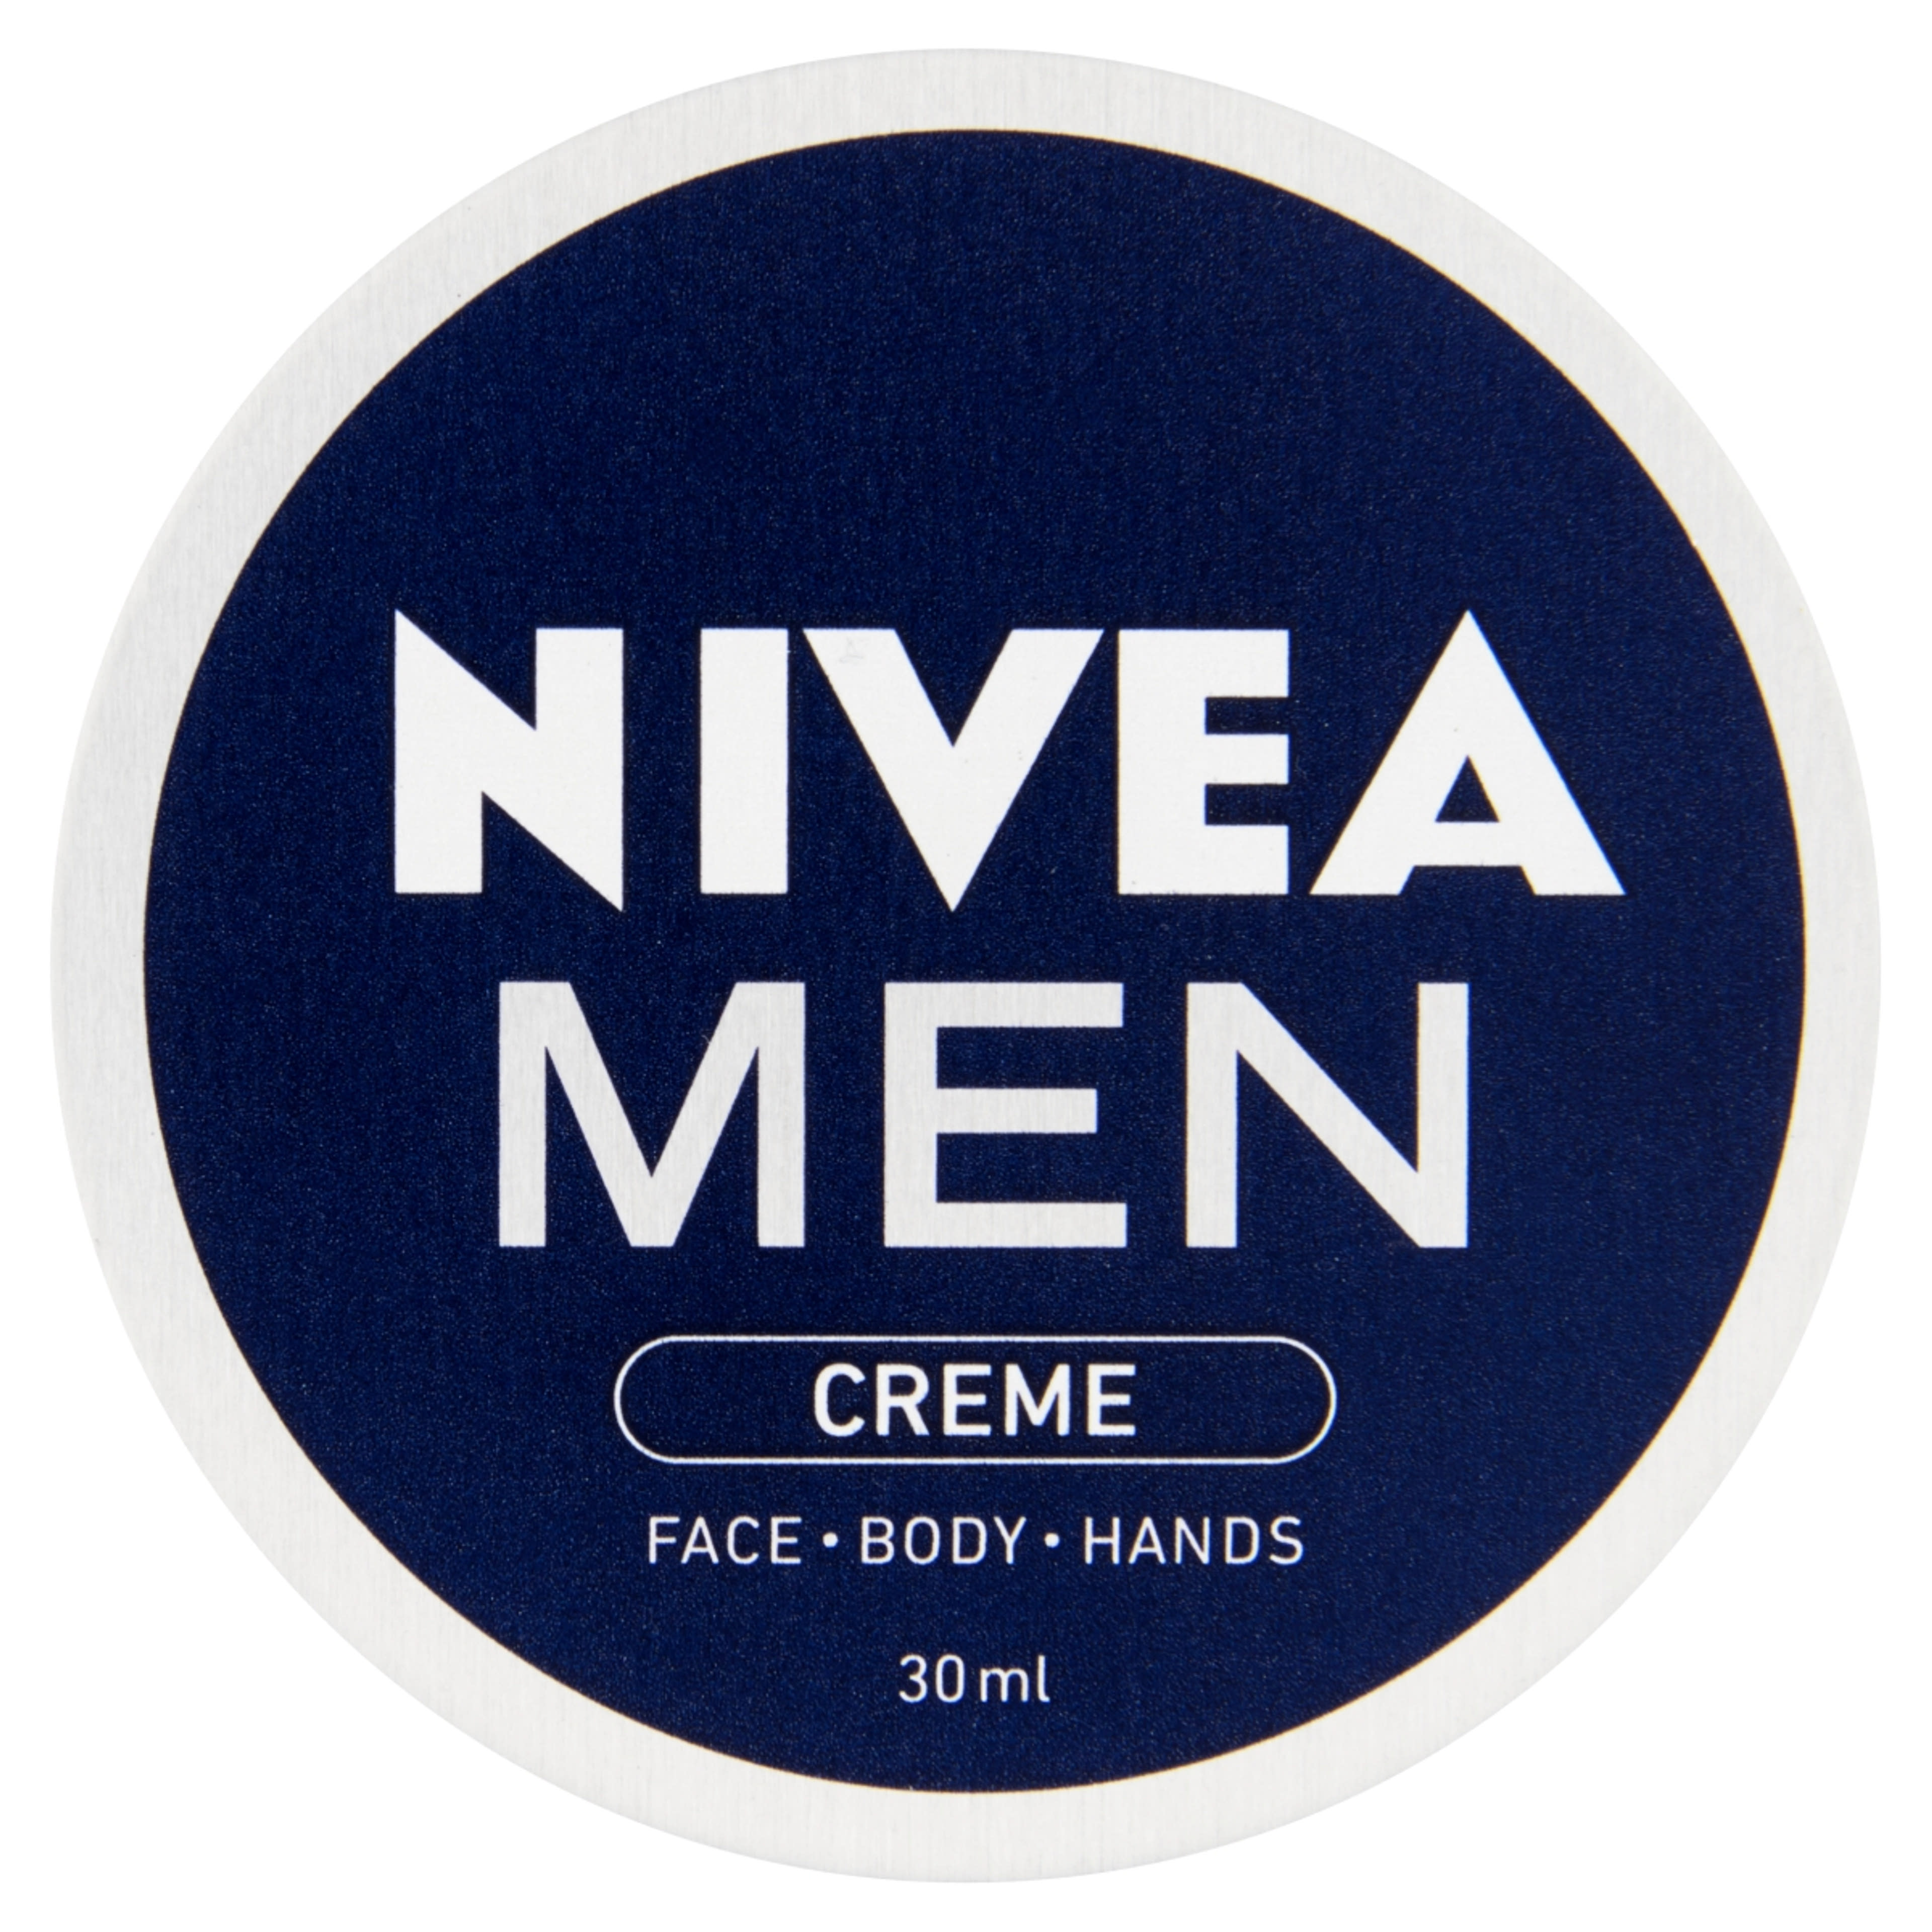 NIVEA MEN Creme - 30 ml